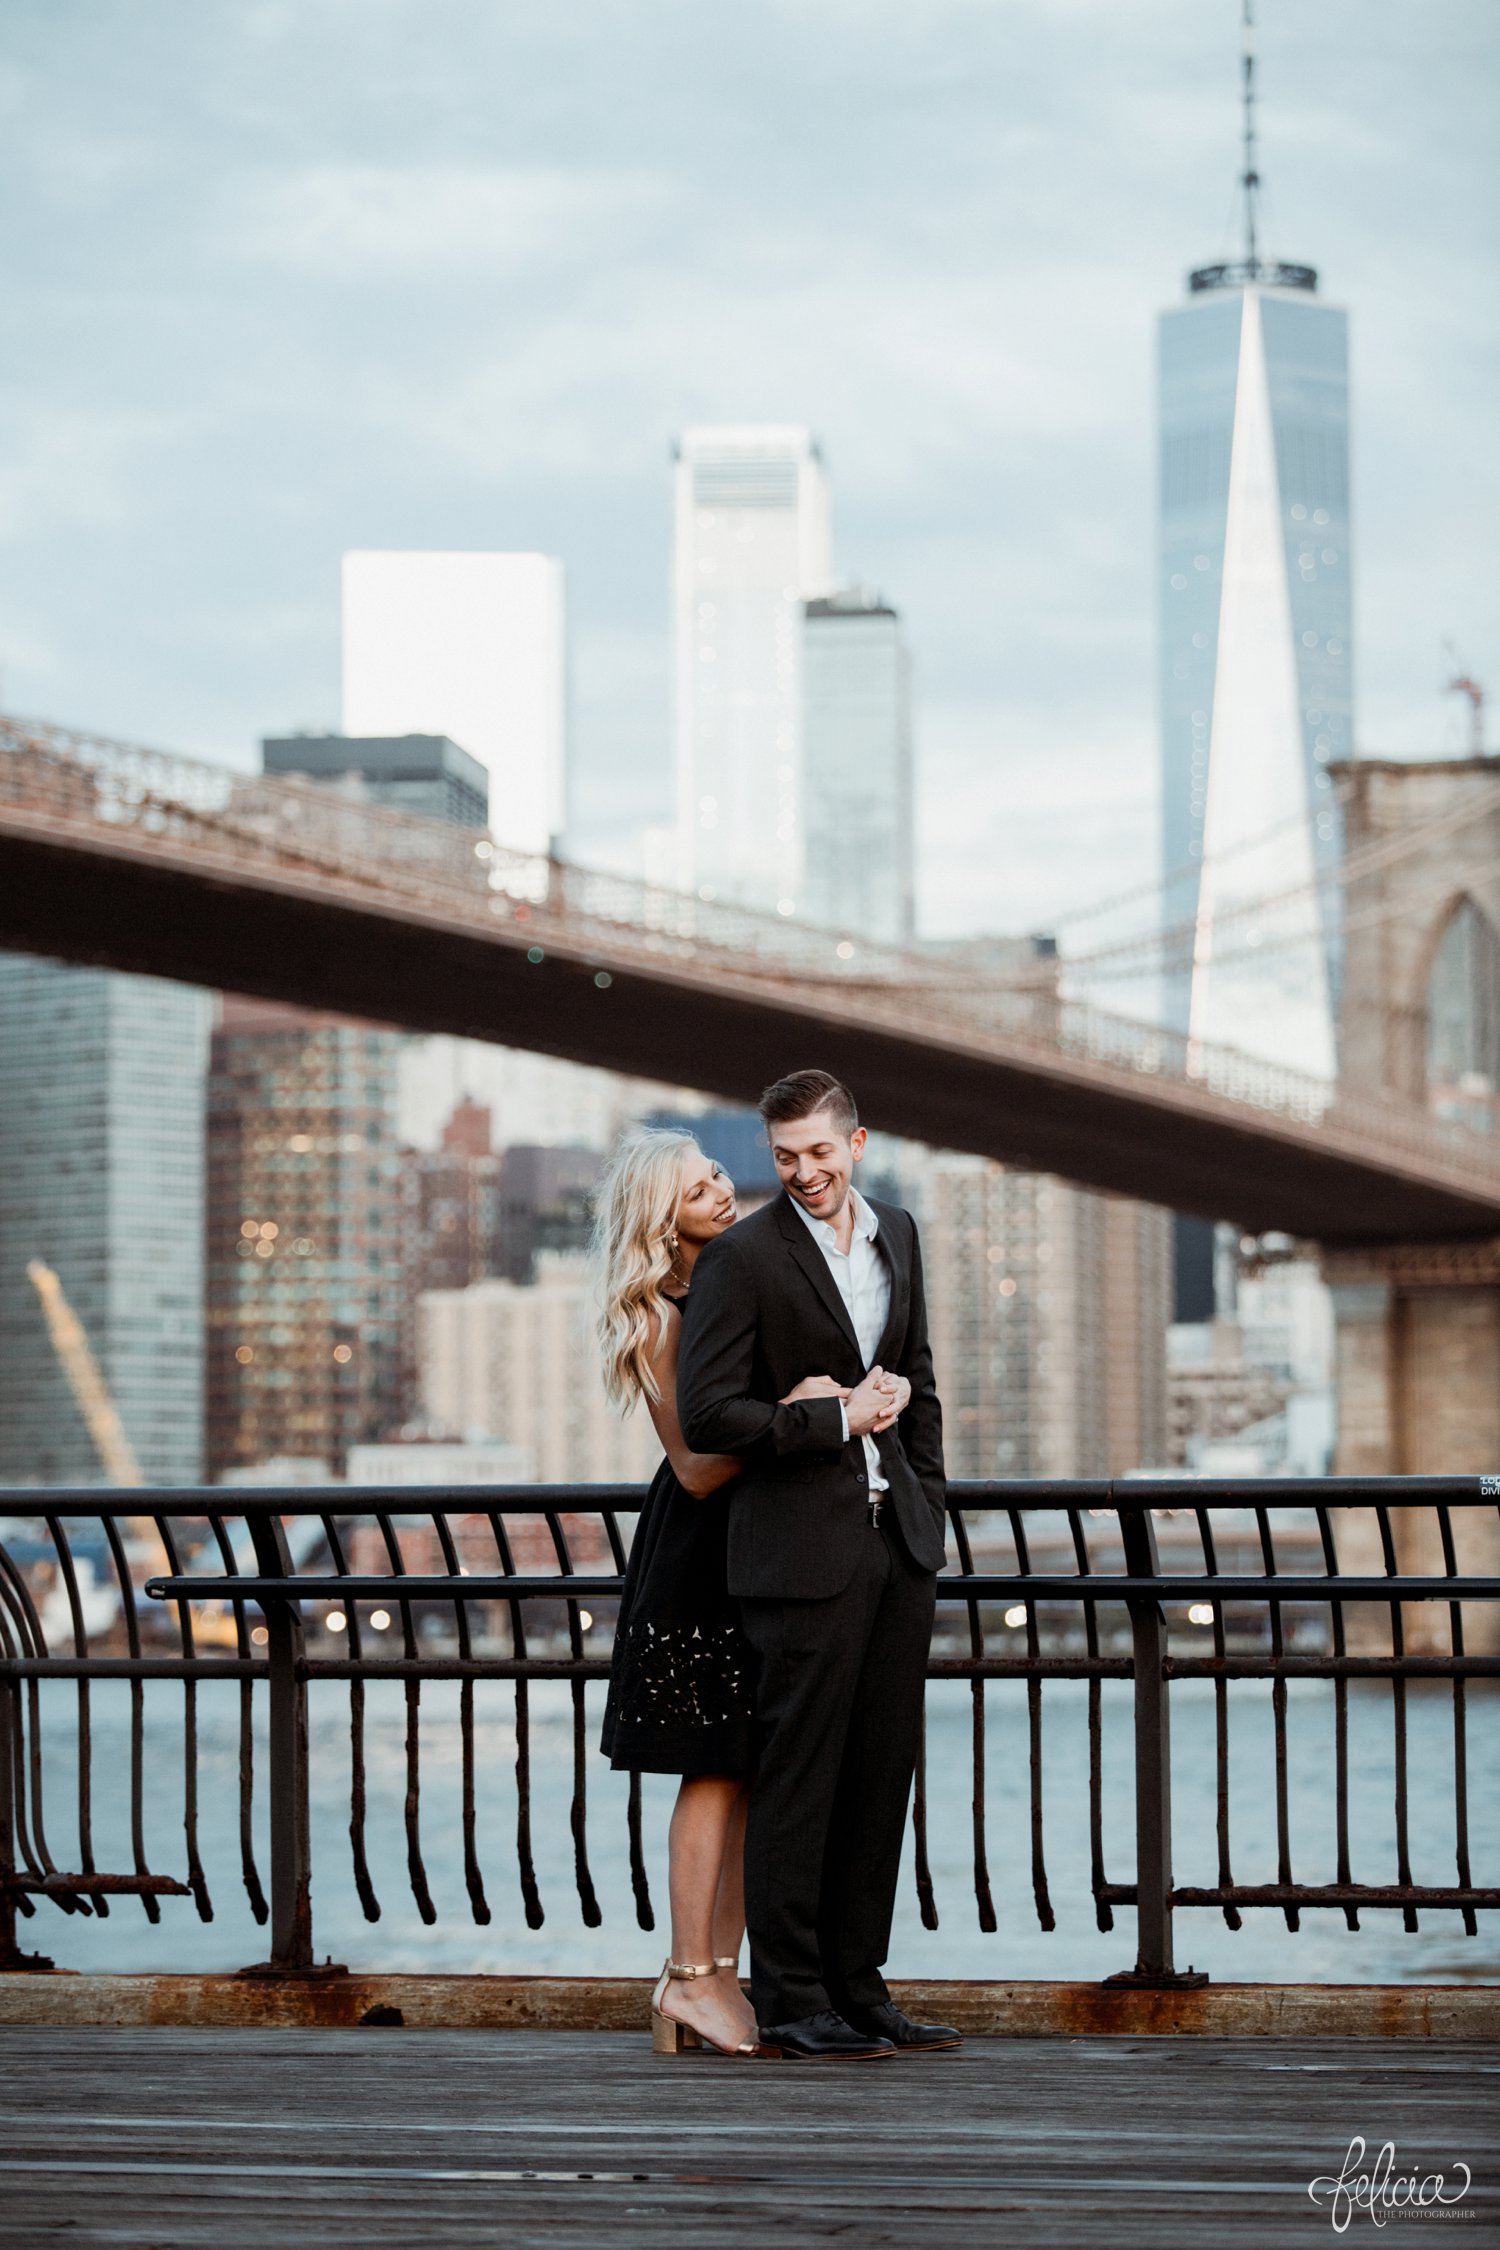 images by feliciathephotographer.com | destination wedding photographer | engagement | new york city | brooklyn bridge | skyline | formal | classic | true love | romantic | 